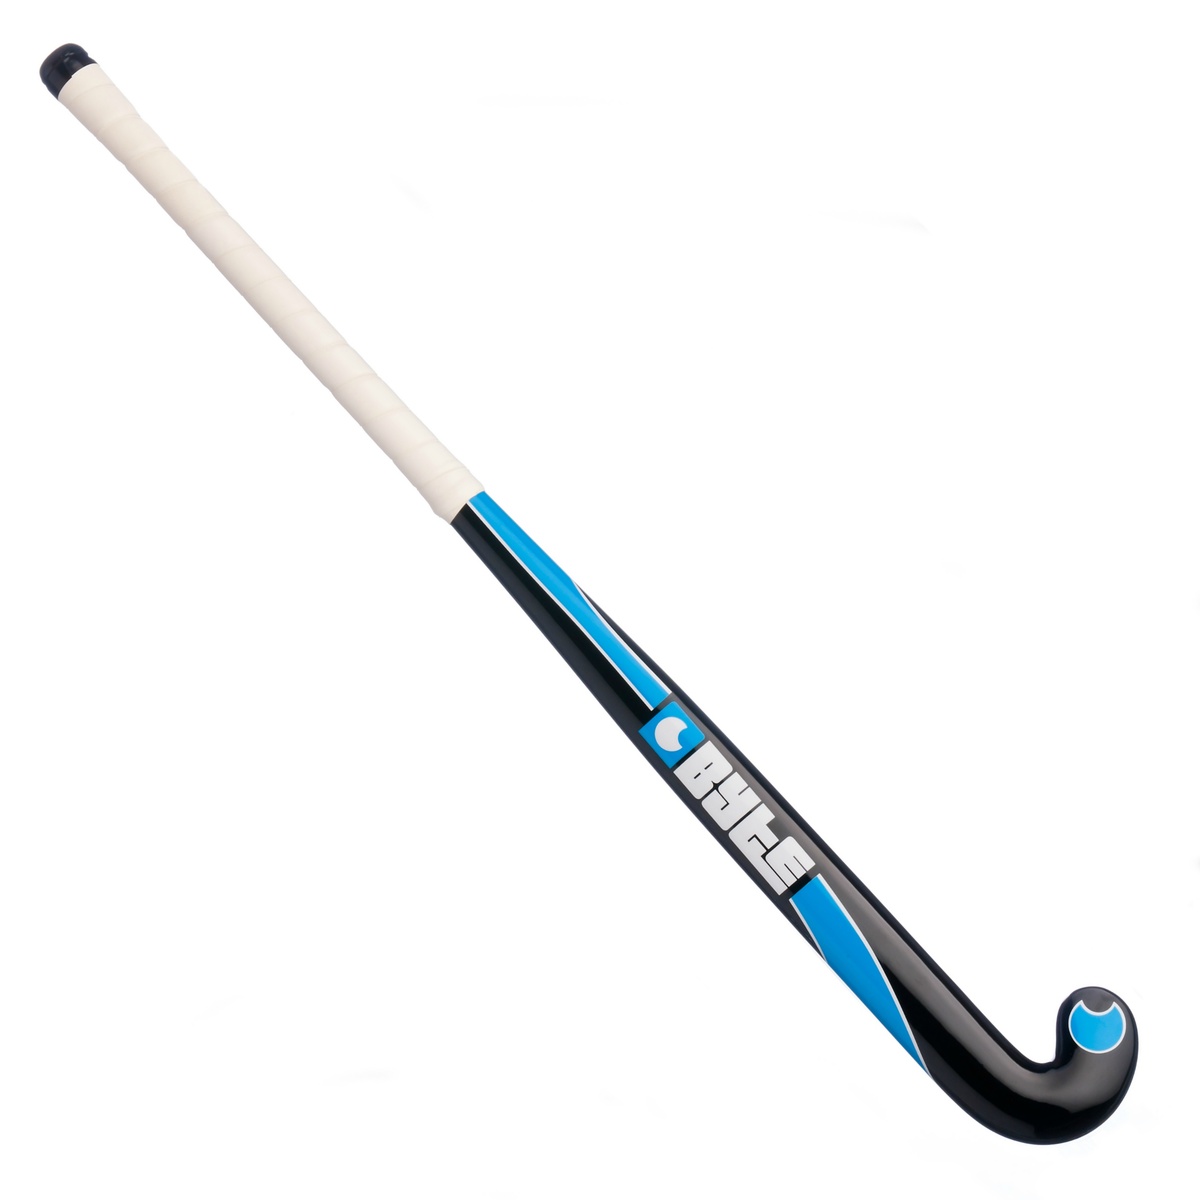 ... Field hockey stick clipar - Hockey Stick Clipart